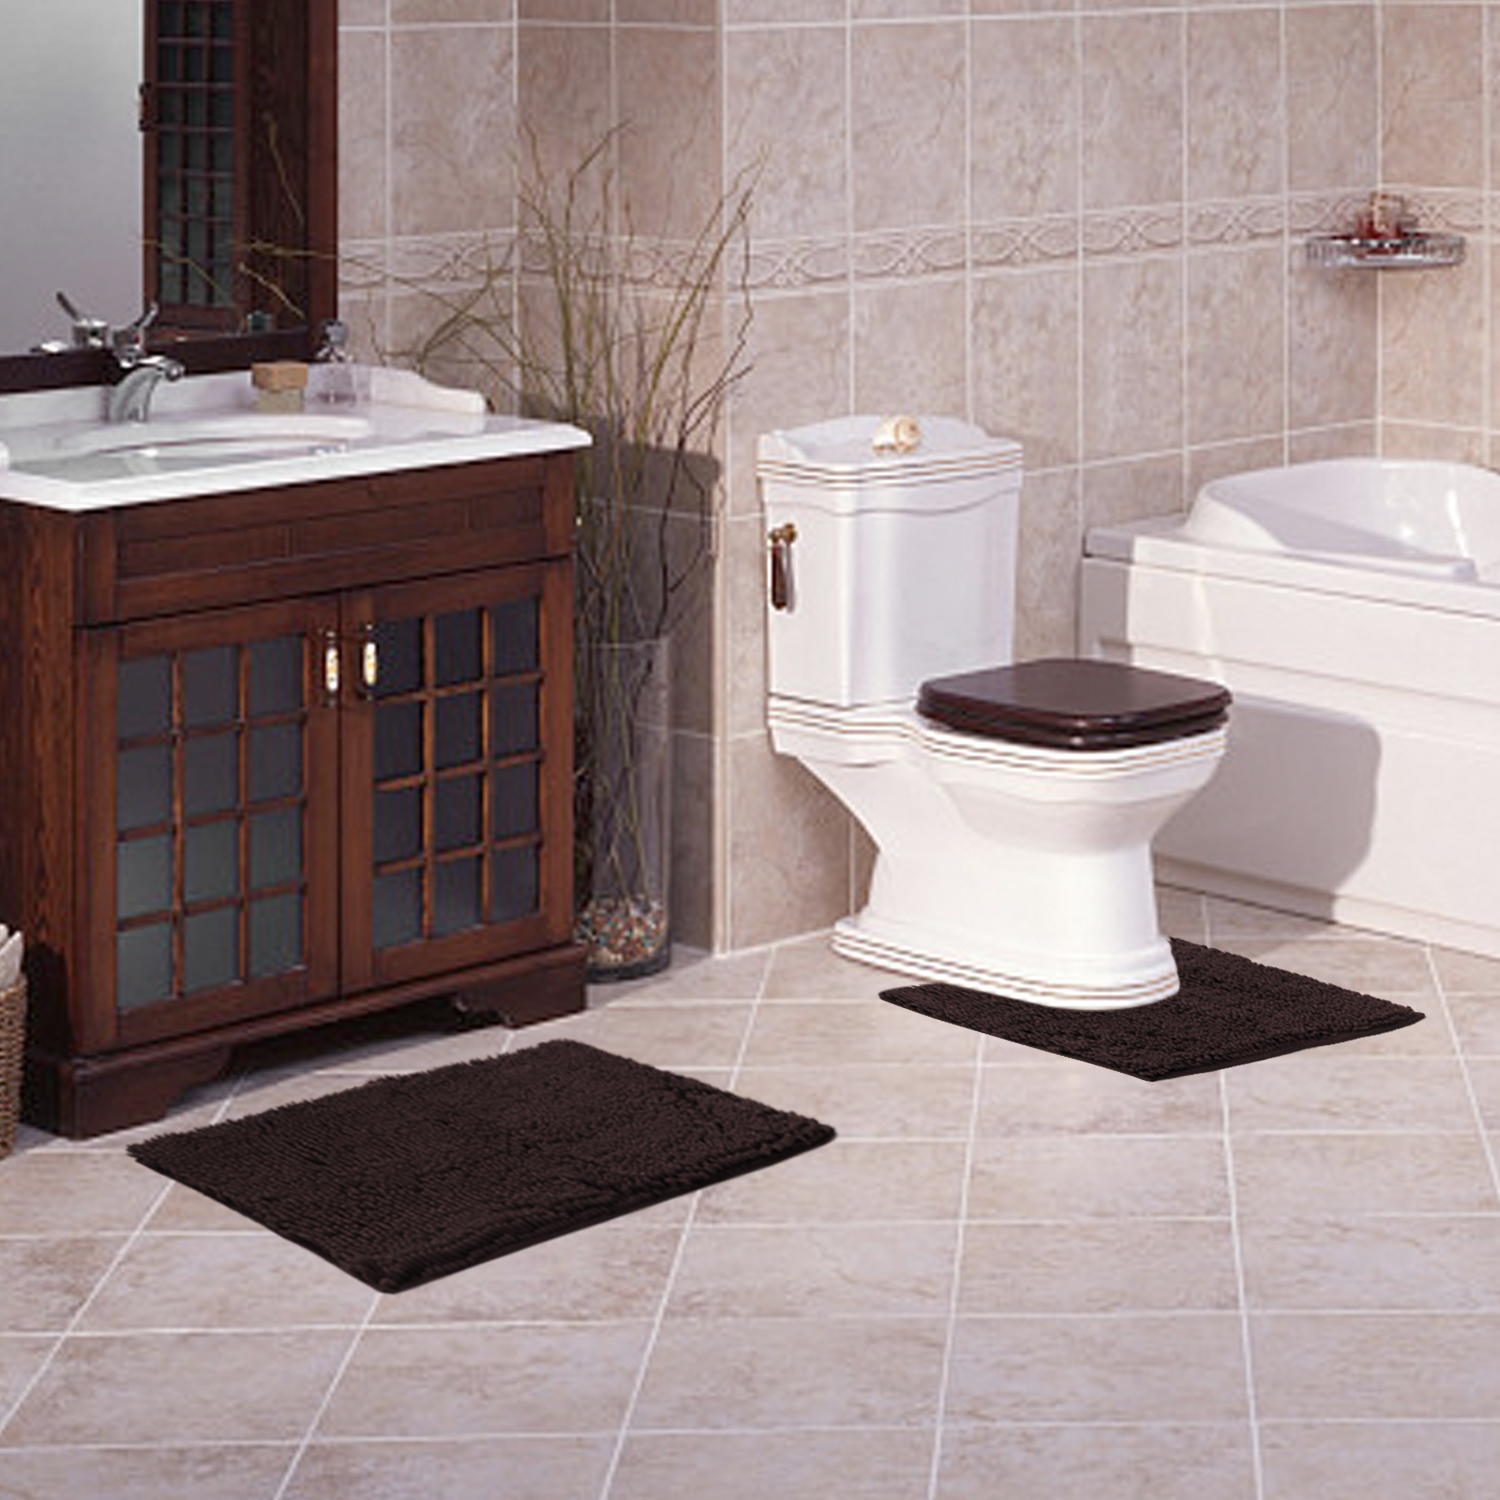 AOACreations Bathroom Rugs Luxury Ultra Soft Chenille Bath Mat 3 Piece Set, Dark Brown - image 4 of 7